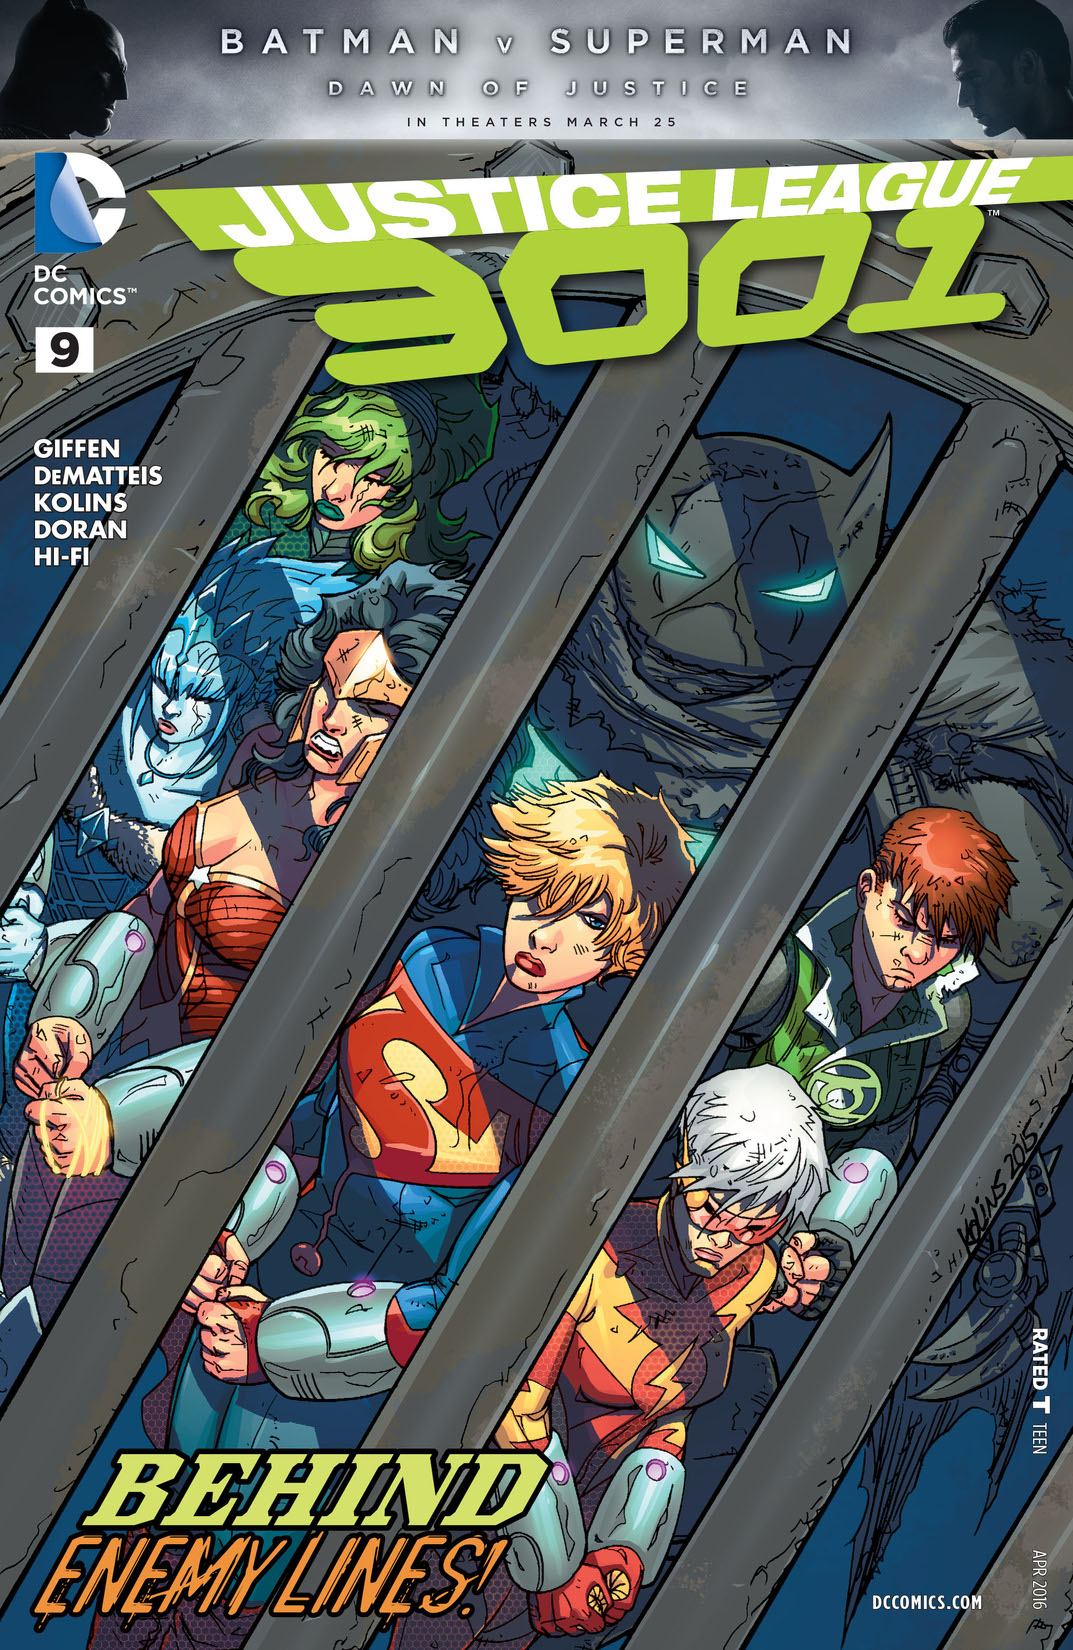 Justice League 3001 #9 preview images